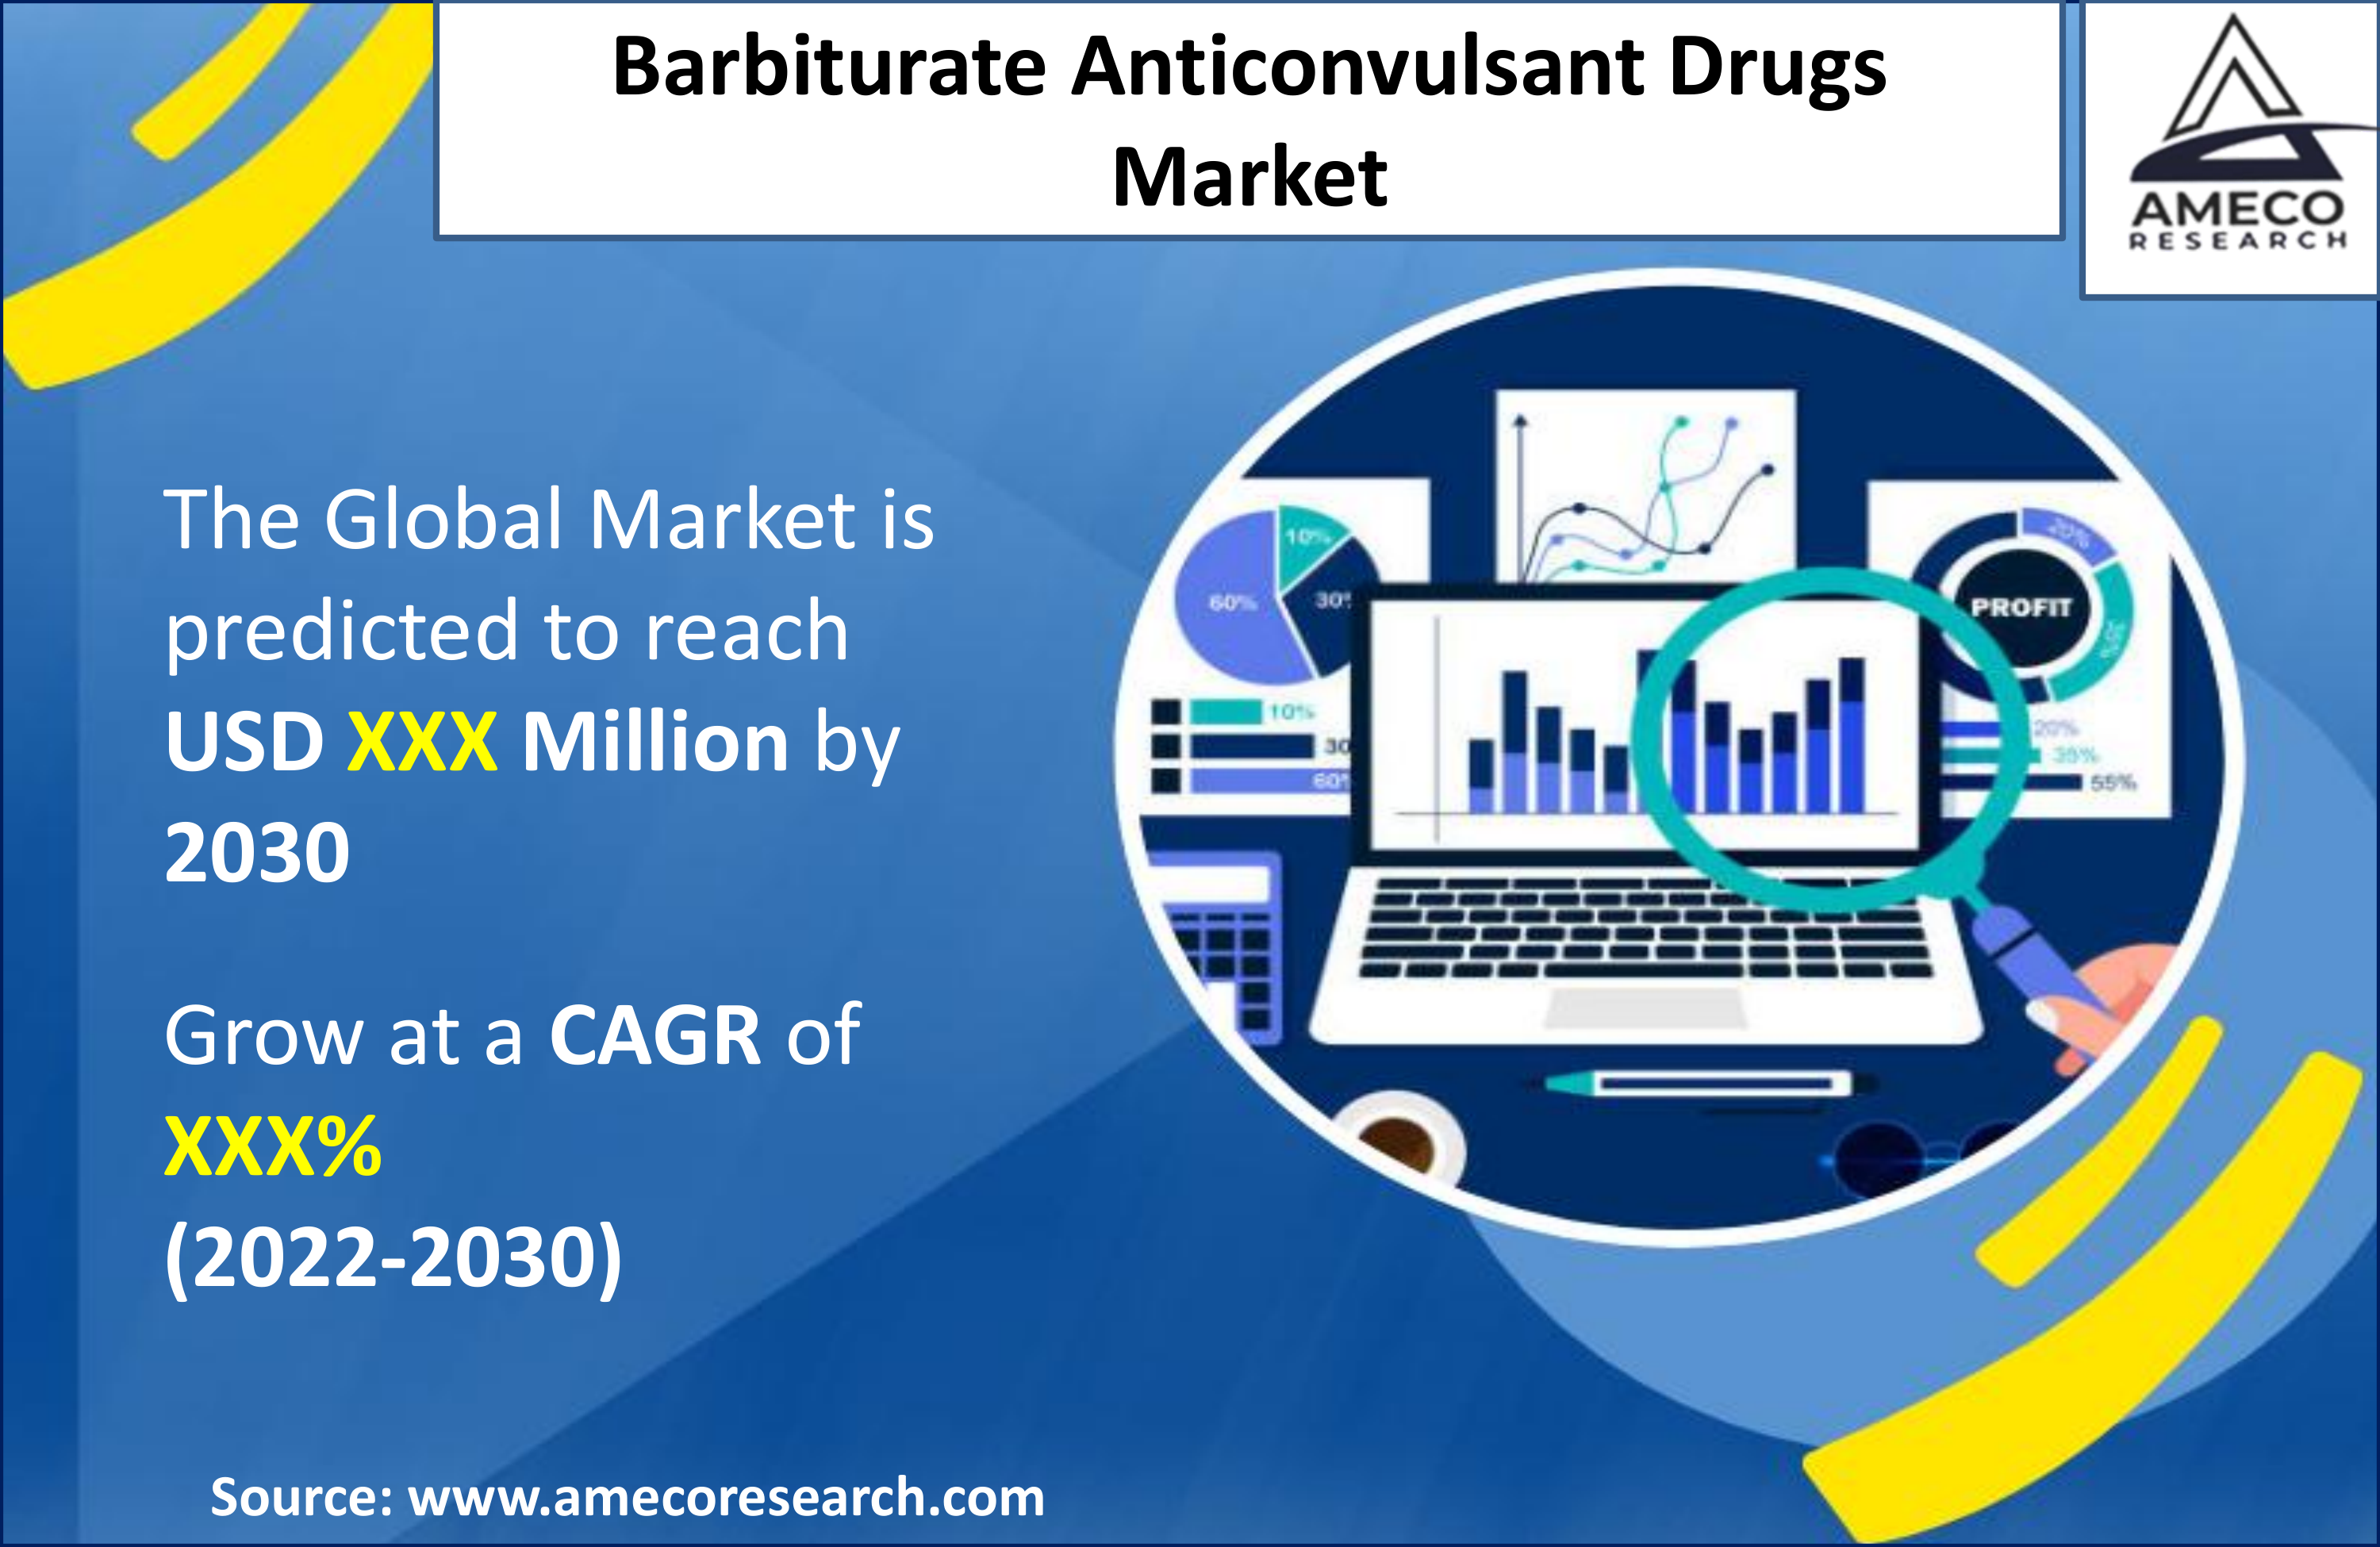 Barbiturate Anticonvulsant Drugs Market